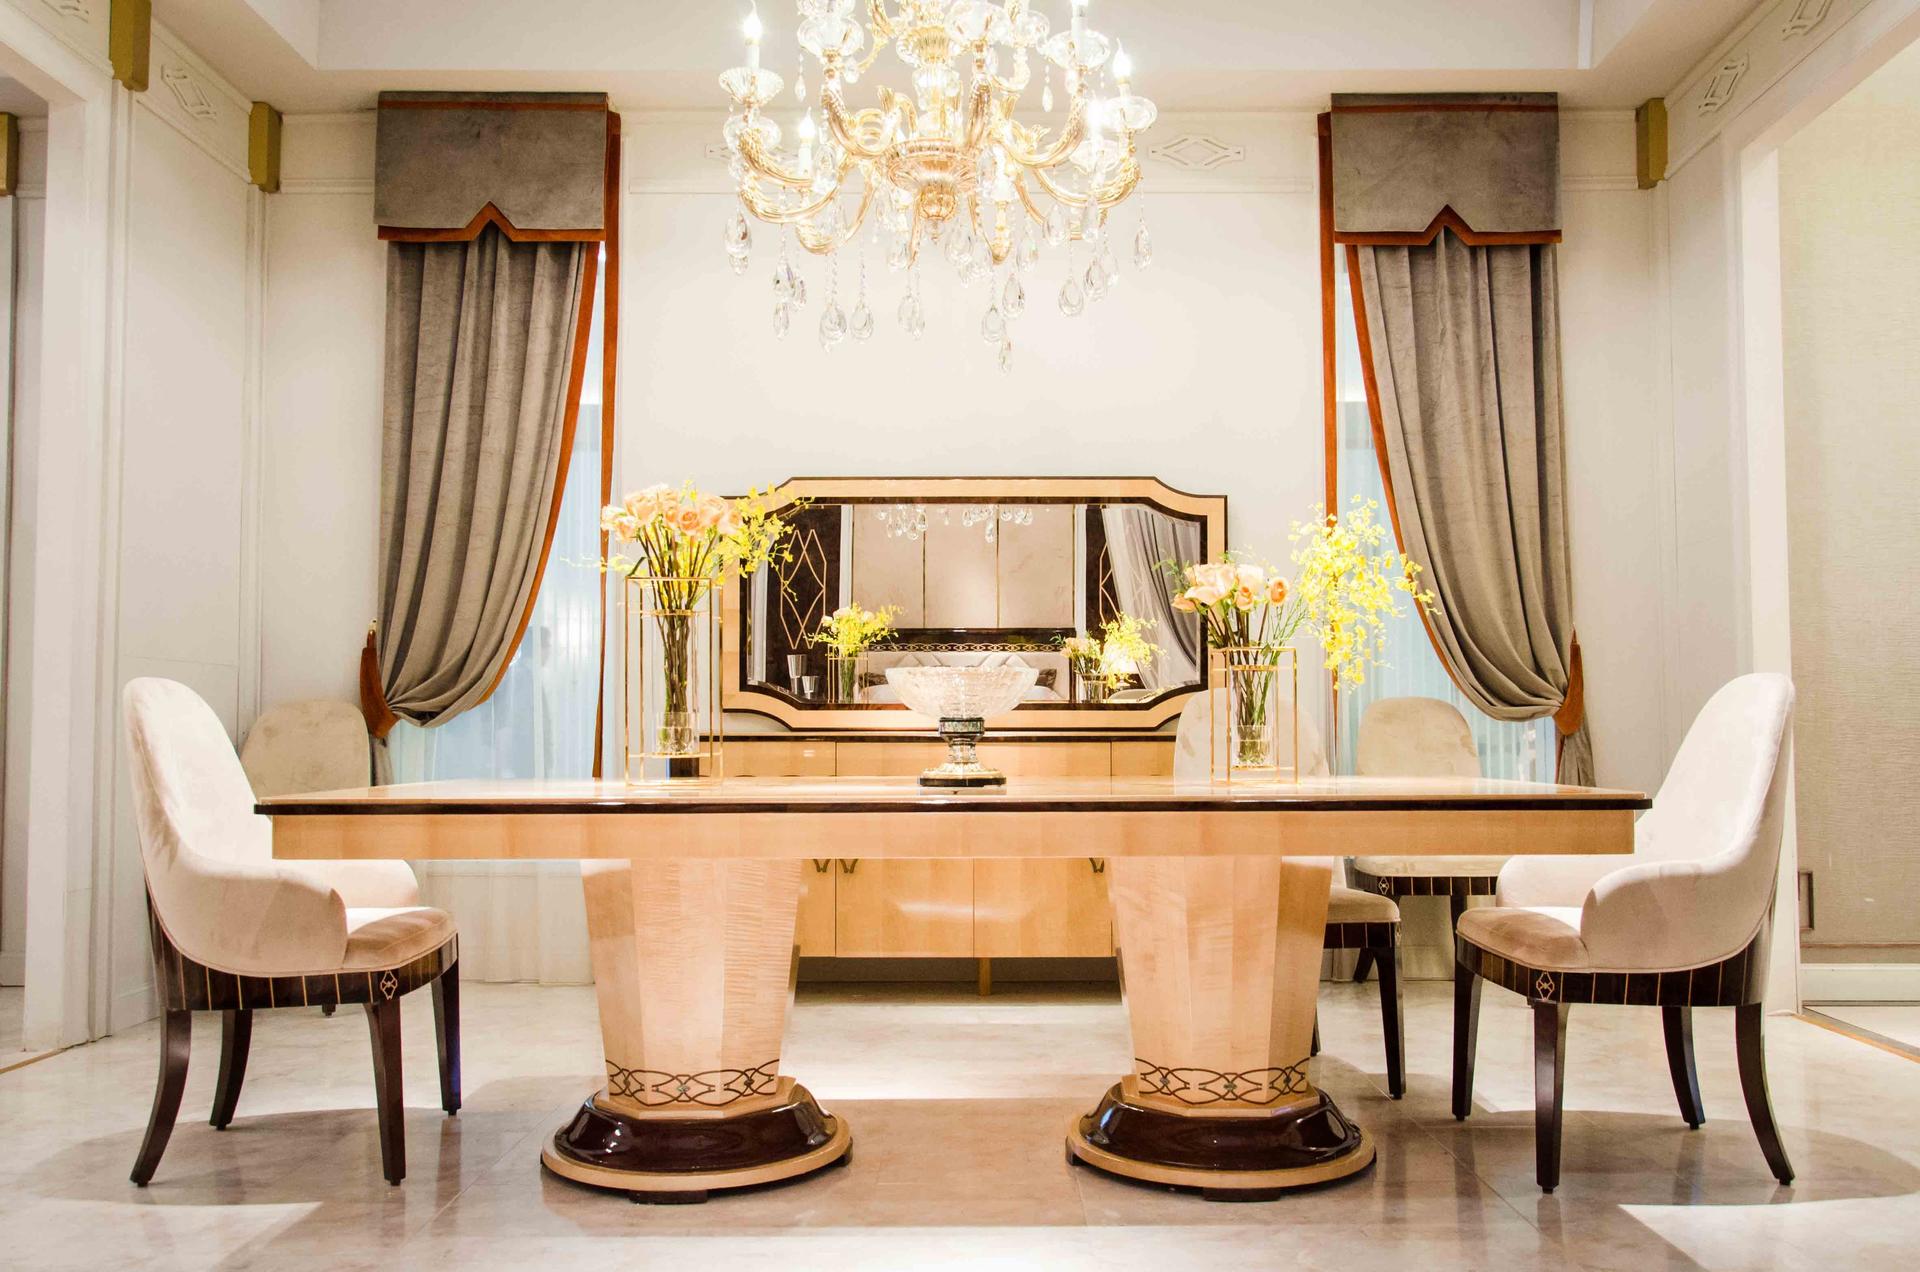 Wholesale set royal classic dining room furniture Senbetter Brand